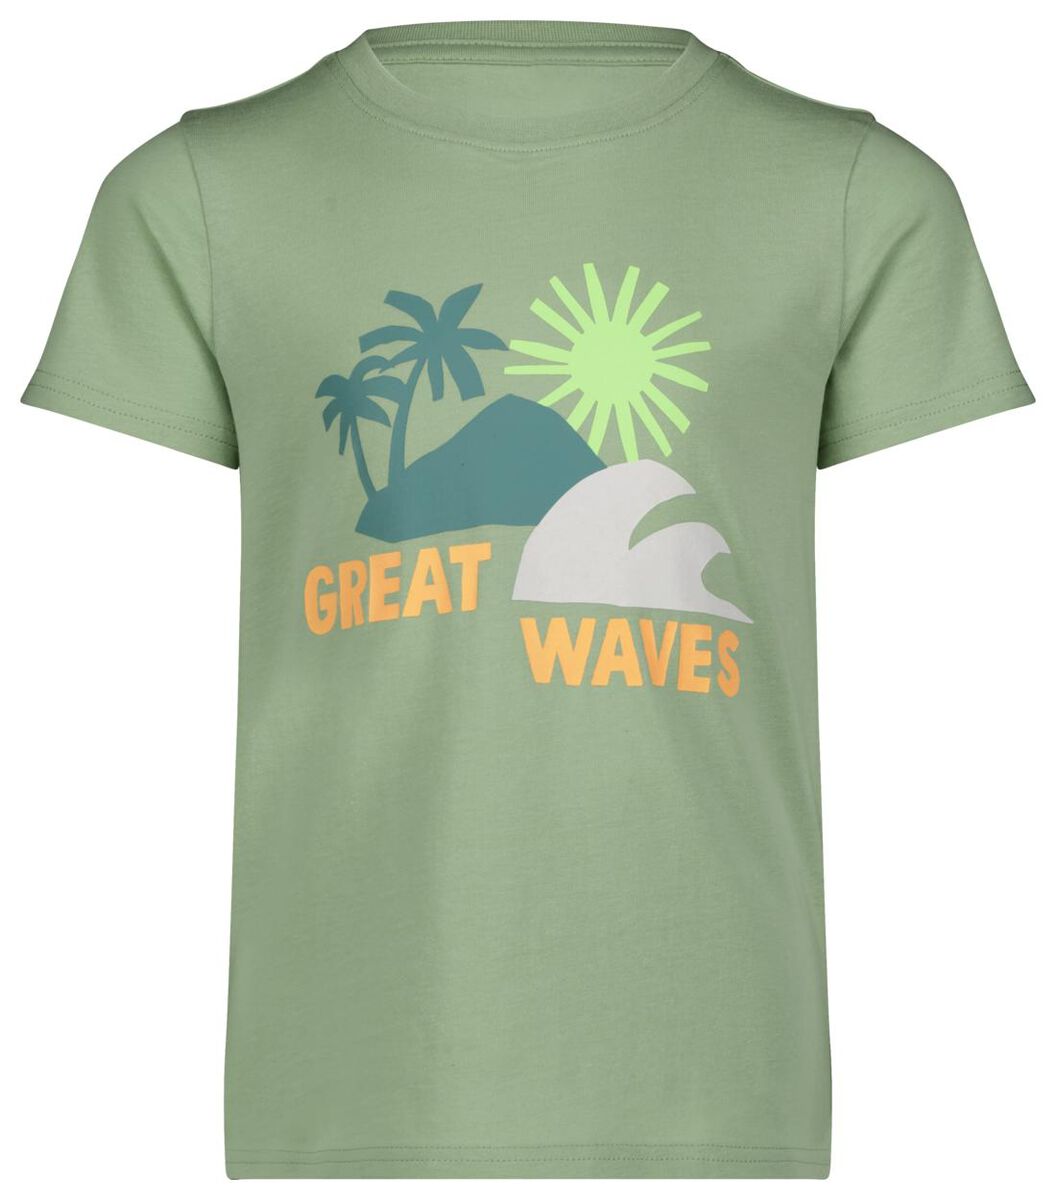 kinder t-shirt great waves lichtgroen - 1000028004 - HEMA